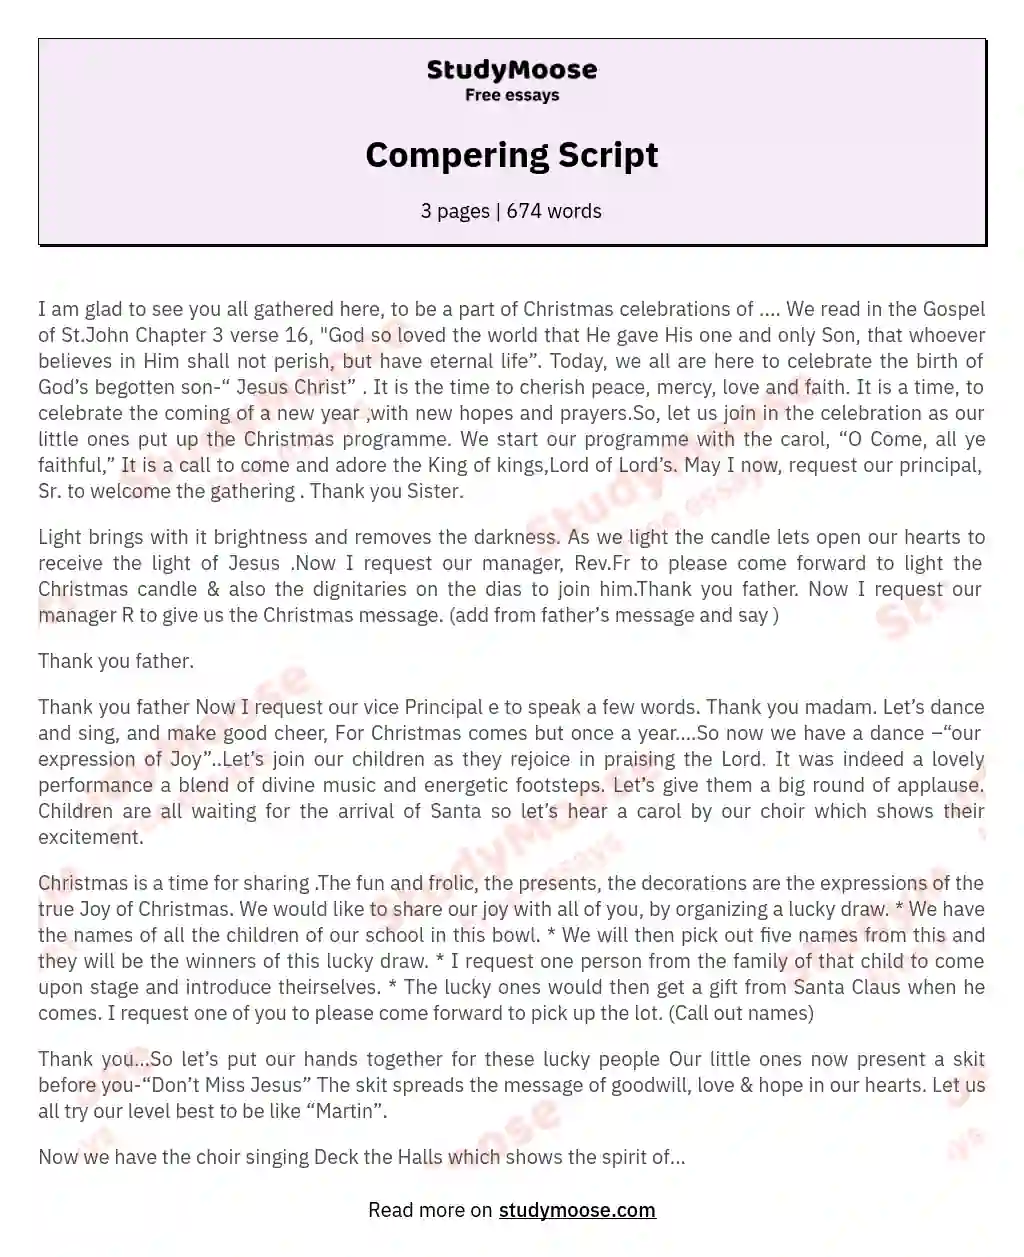 Compering Script essay